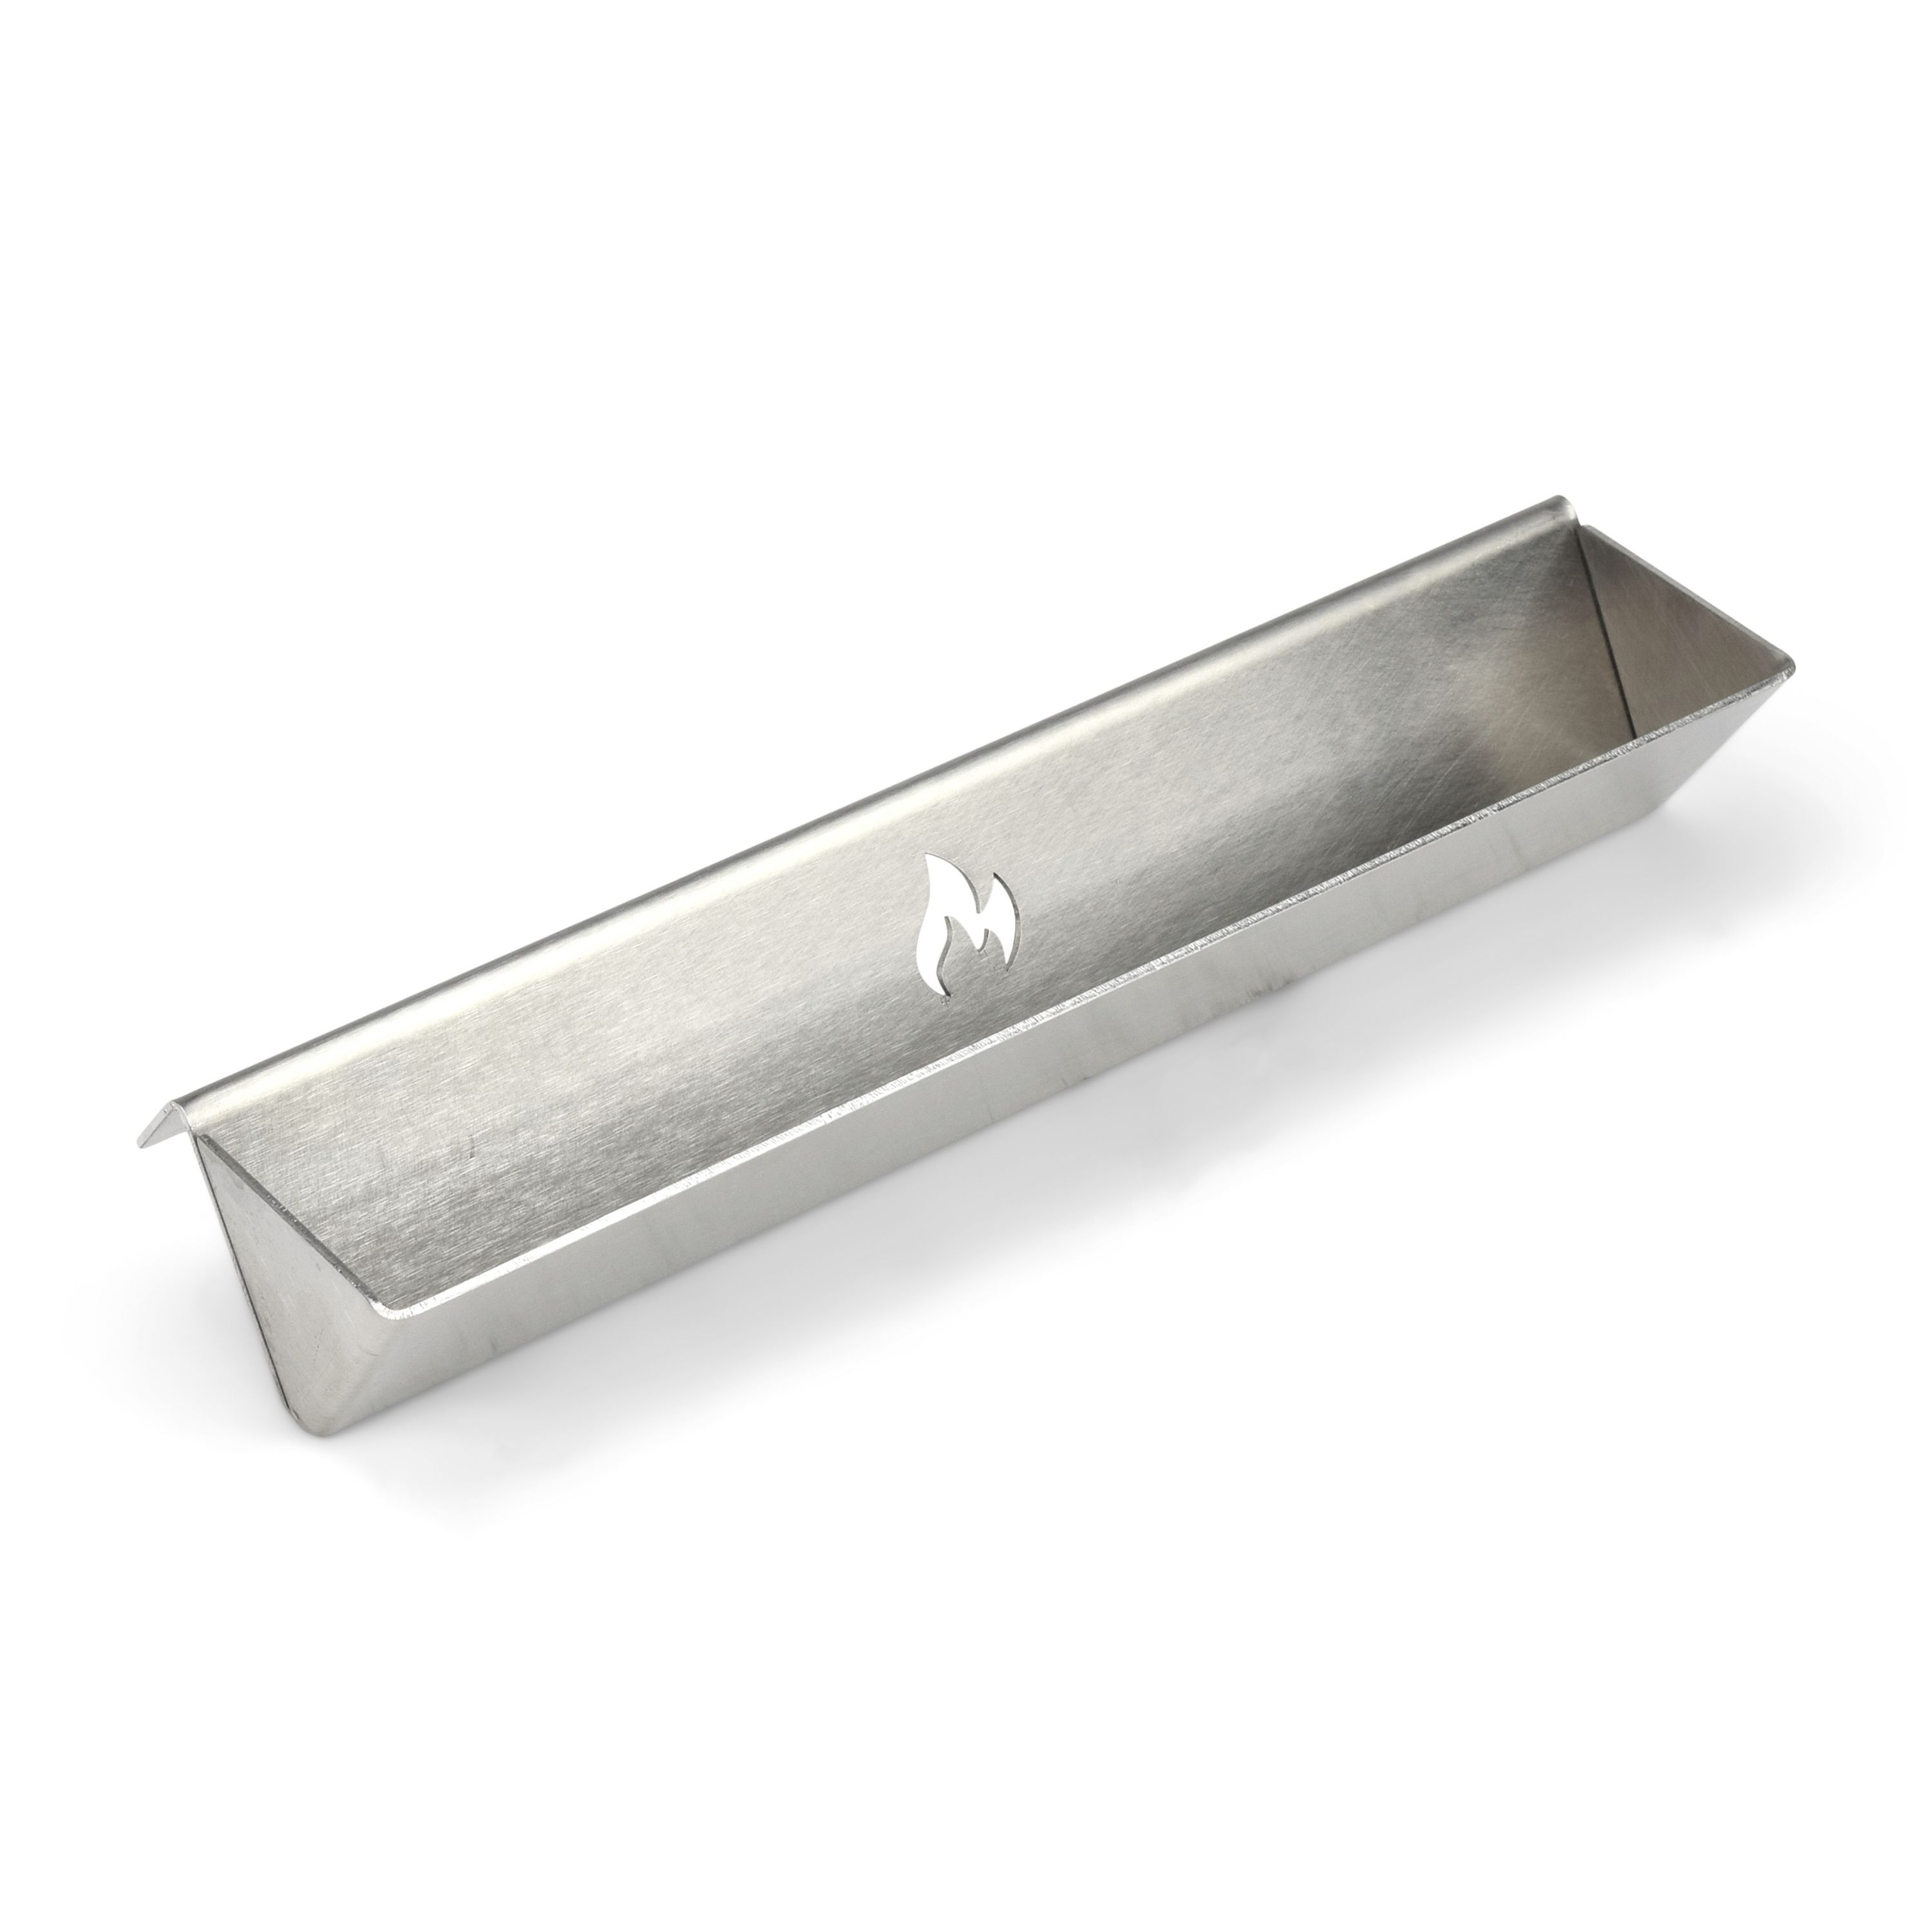 Stainless steel smoker rail